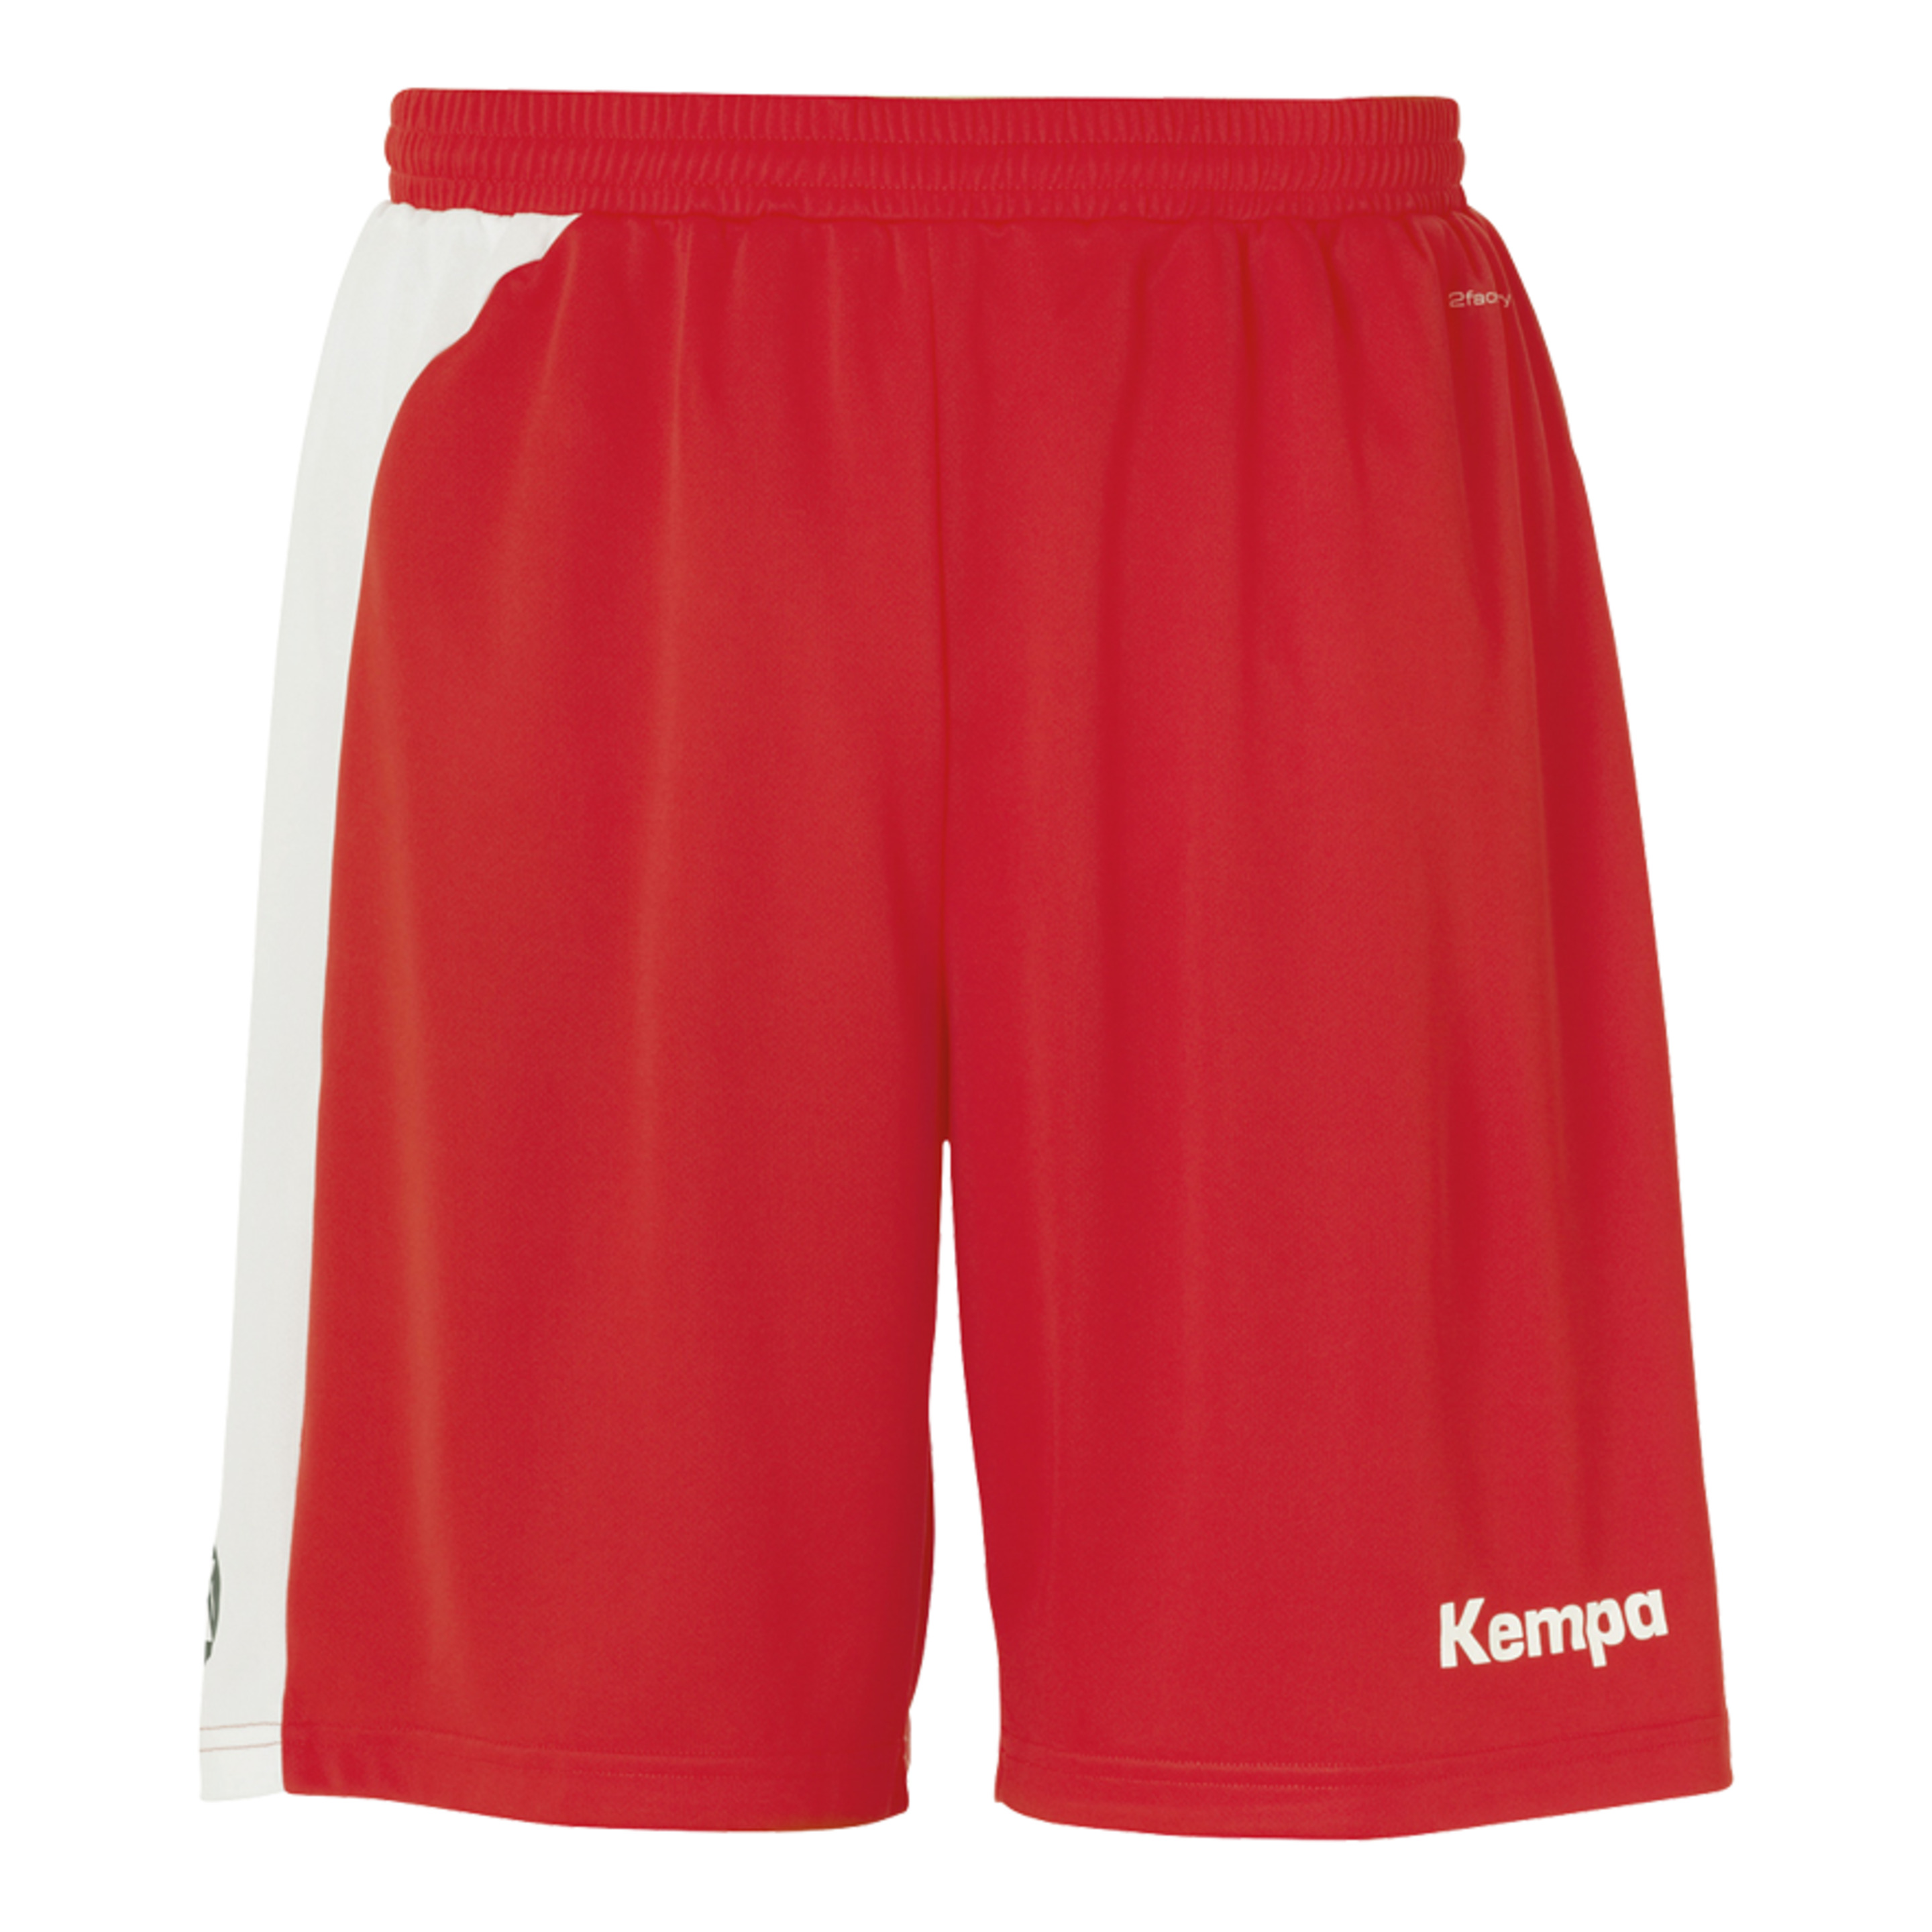 Peak Shorts Rojo/blanco Kempa - rojo - 